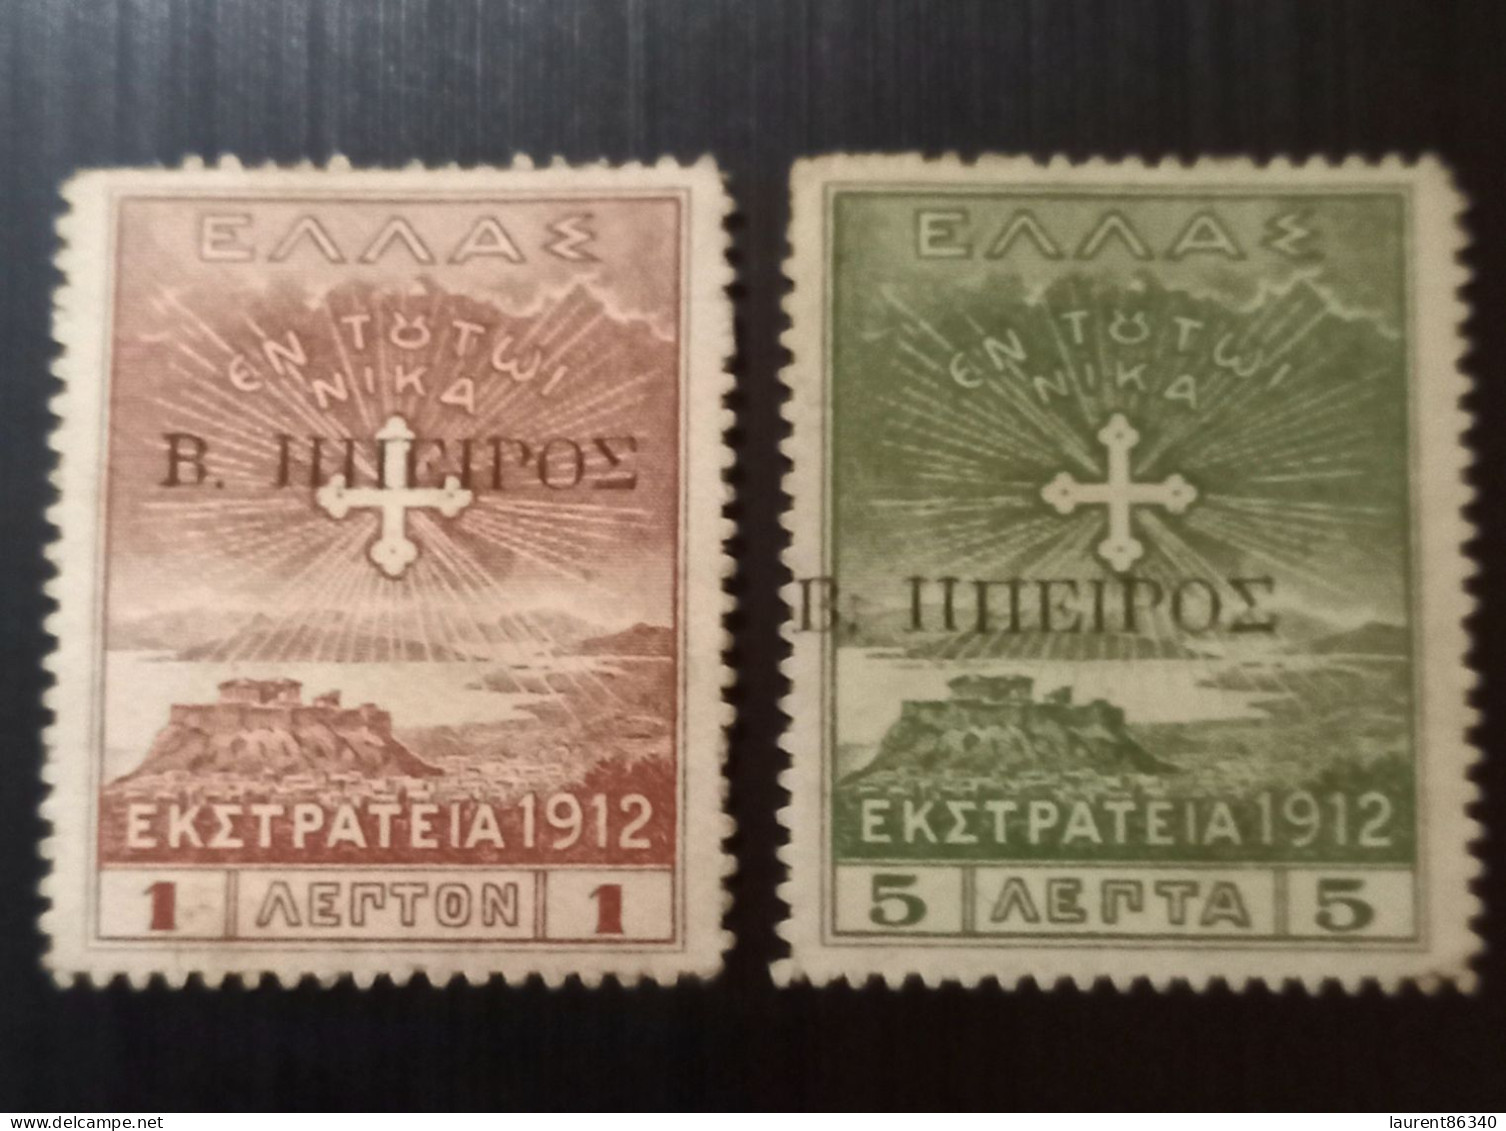 Grèce 1914 Épire Du Nord Occupation Surcharge " Β. ΗΠΕΙΡΟΣ "1915 Greek Postage Stamps Of 1913 Overprinted "B. HΠΕΙΡΟΣ - Epirus & Albanie